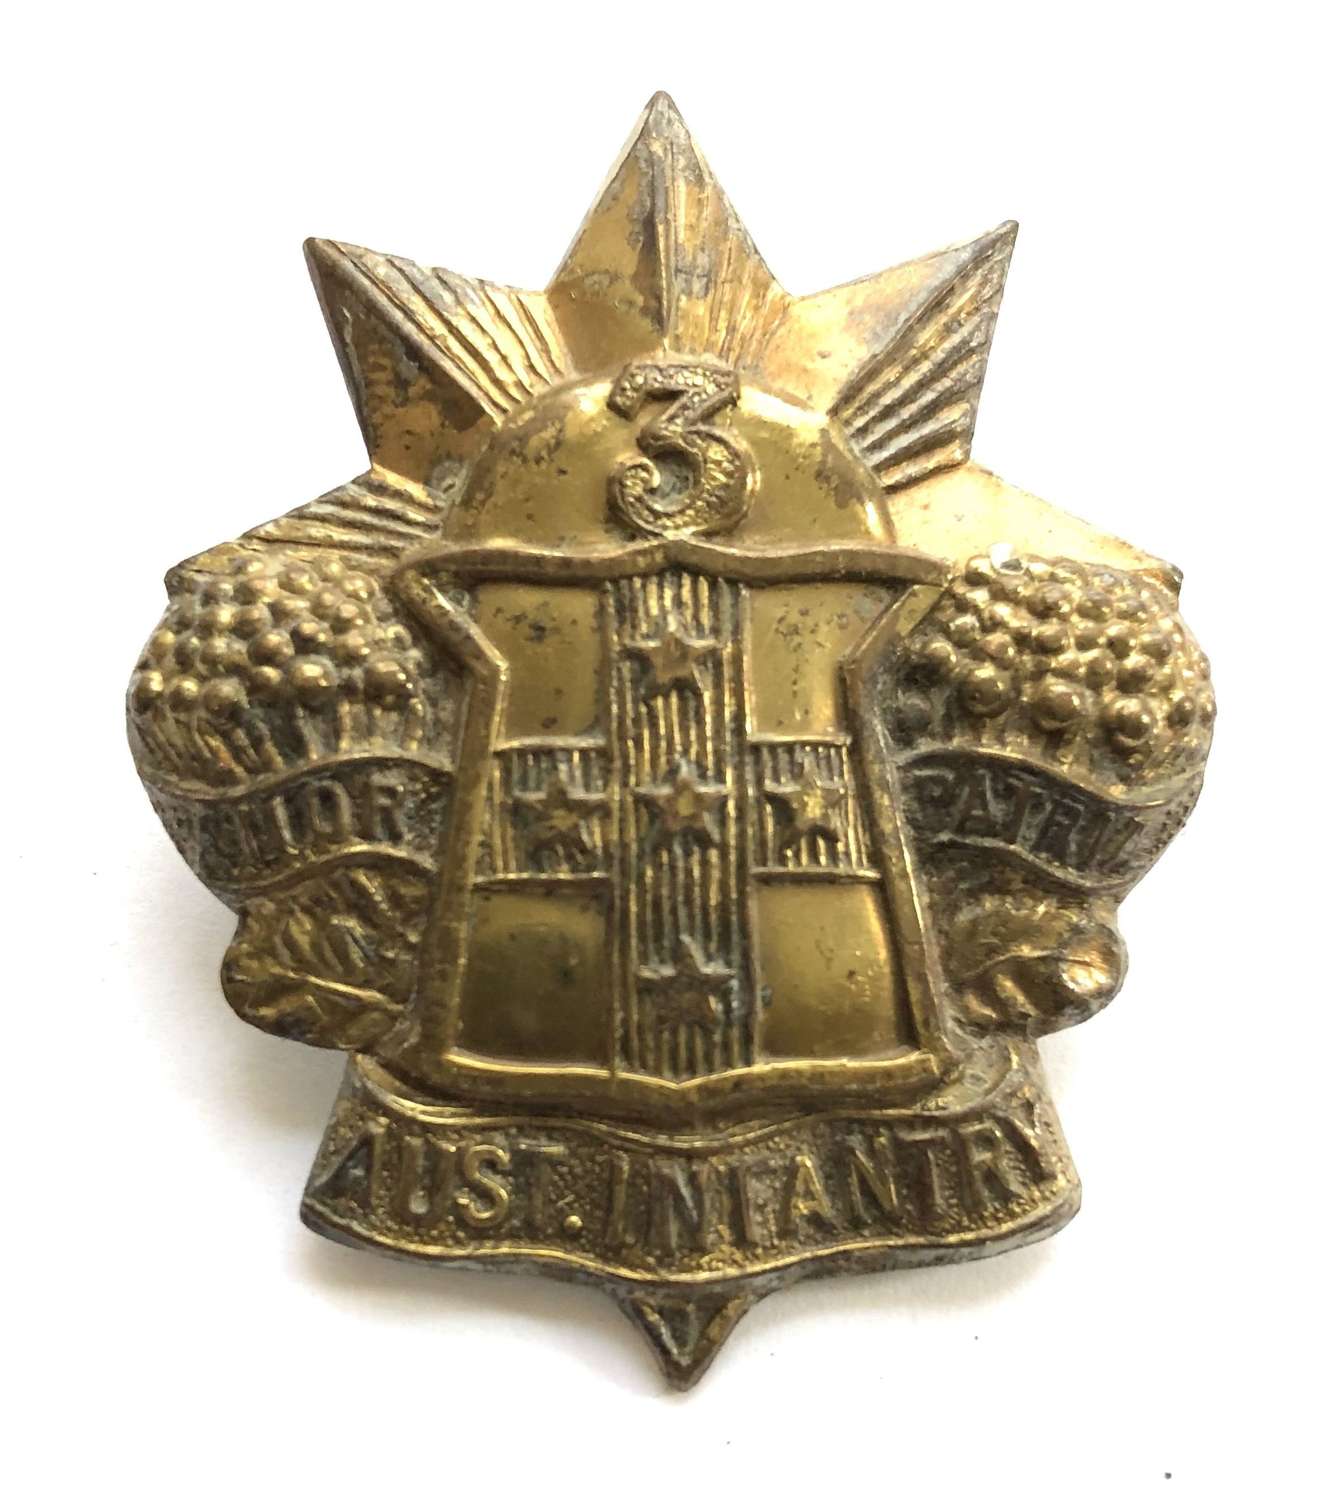 3rd Australian Infantry Regiment Slouch Hate badge circa 1900-1912